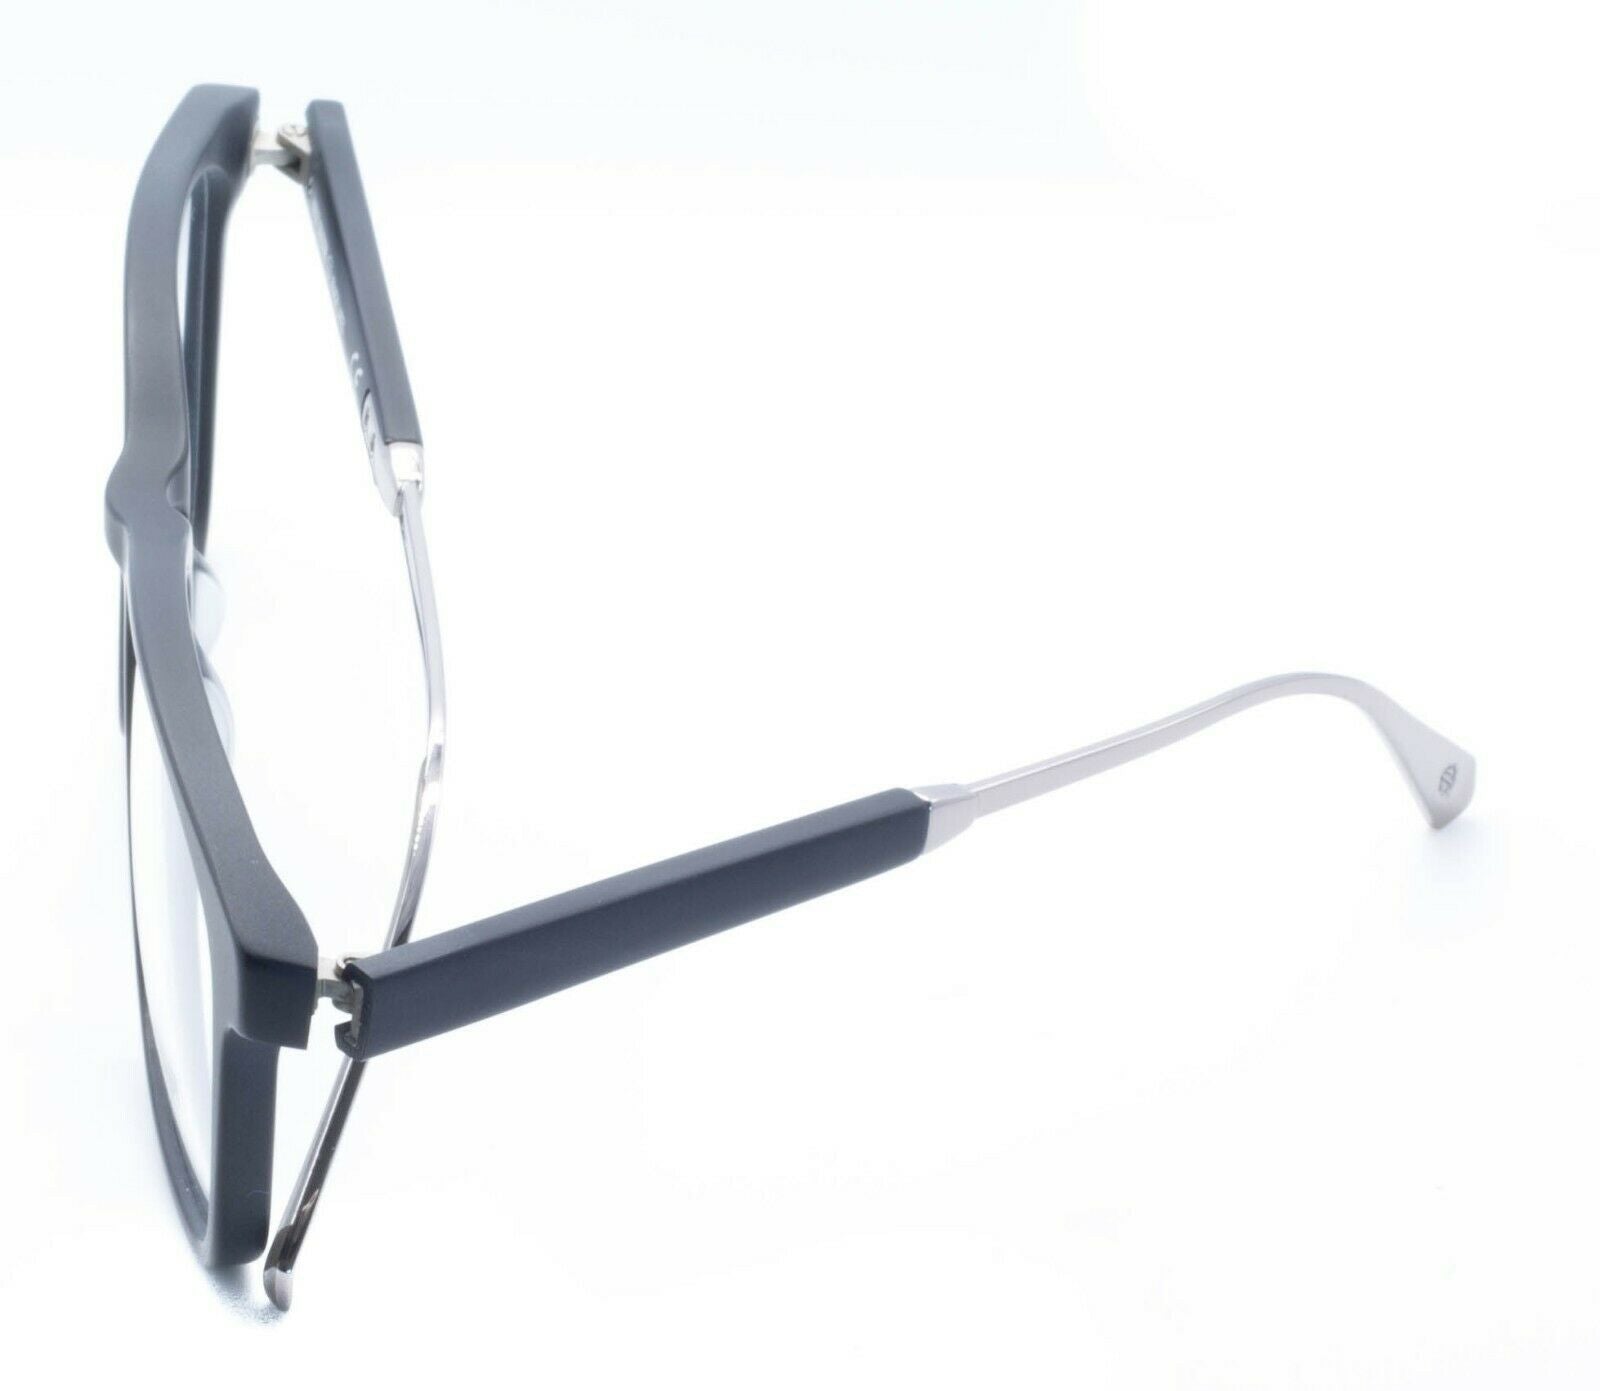 HARLEY-DAVIDSON HD1027 002 54mm Eyewear FRAMES RX Optical Eyeglasses Glasses New